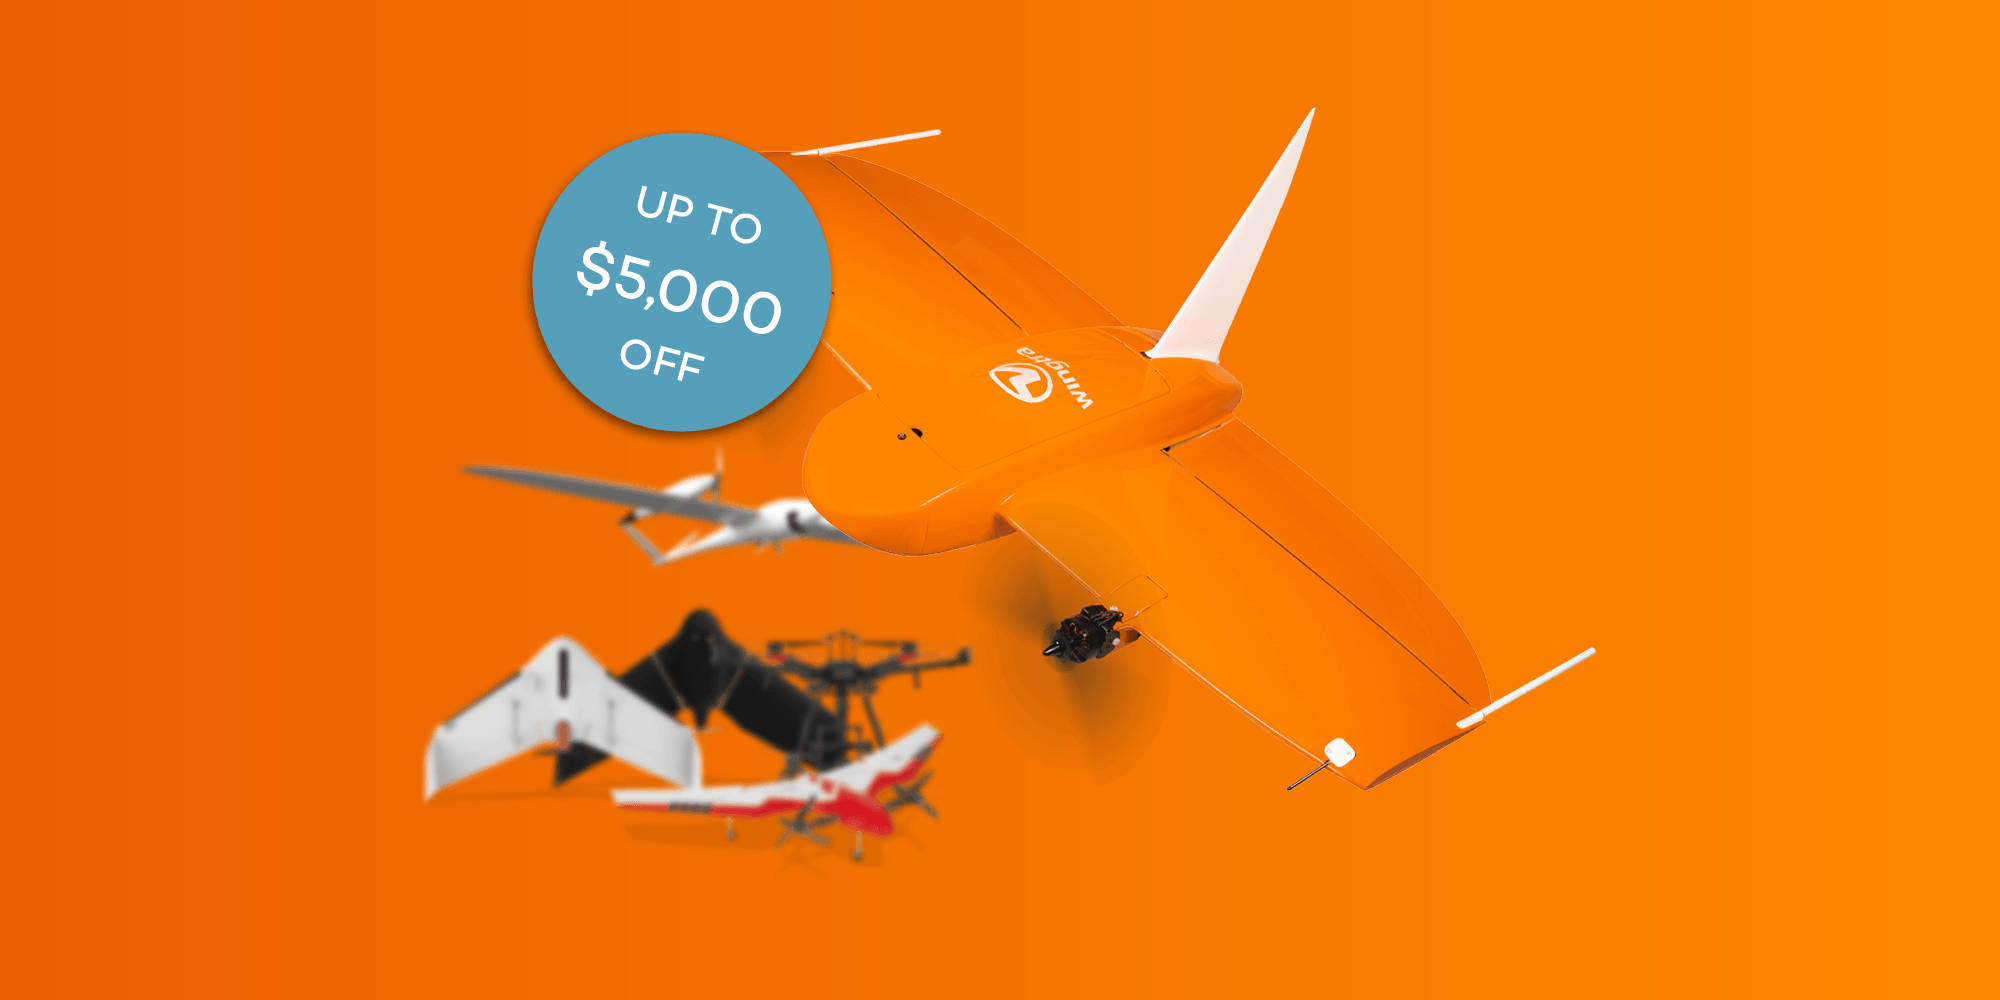 wingtra drone price